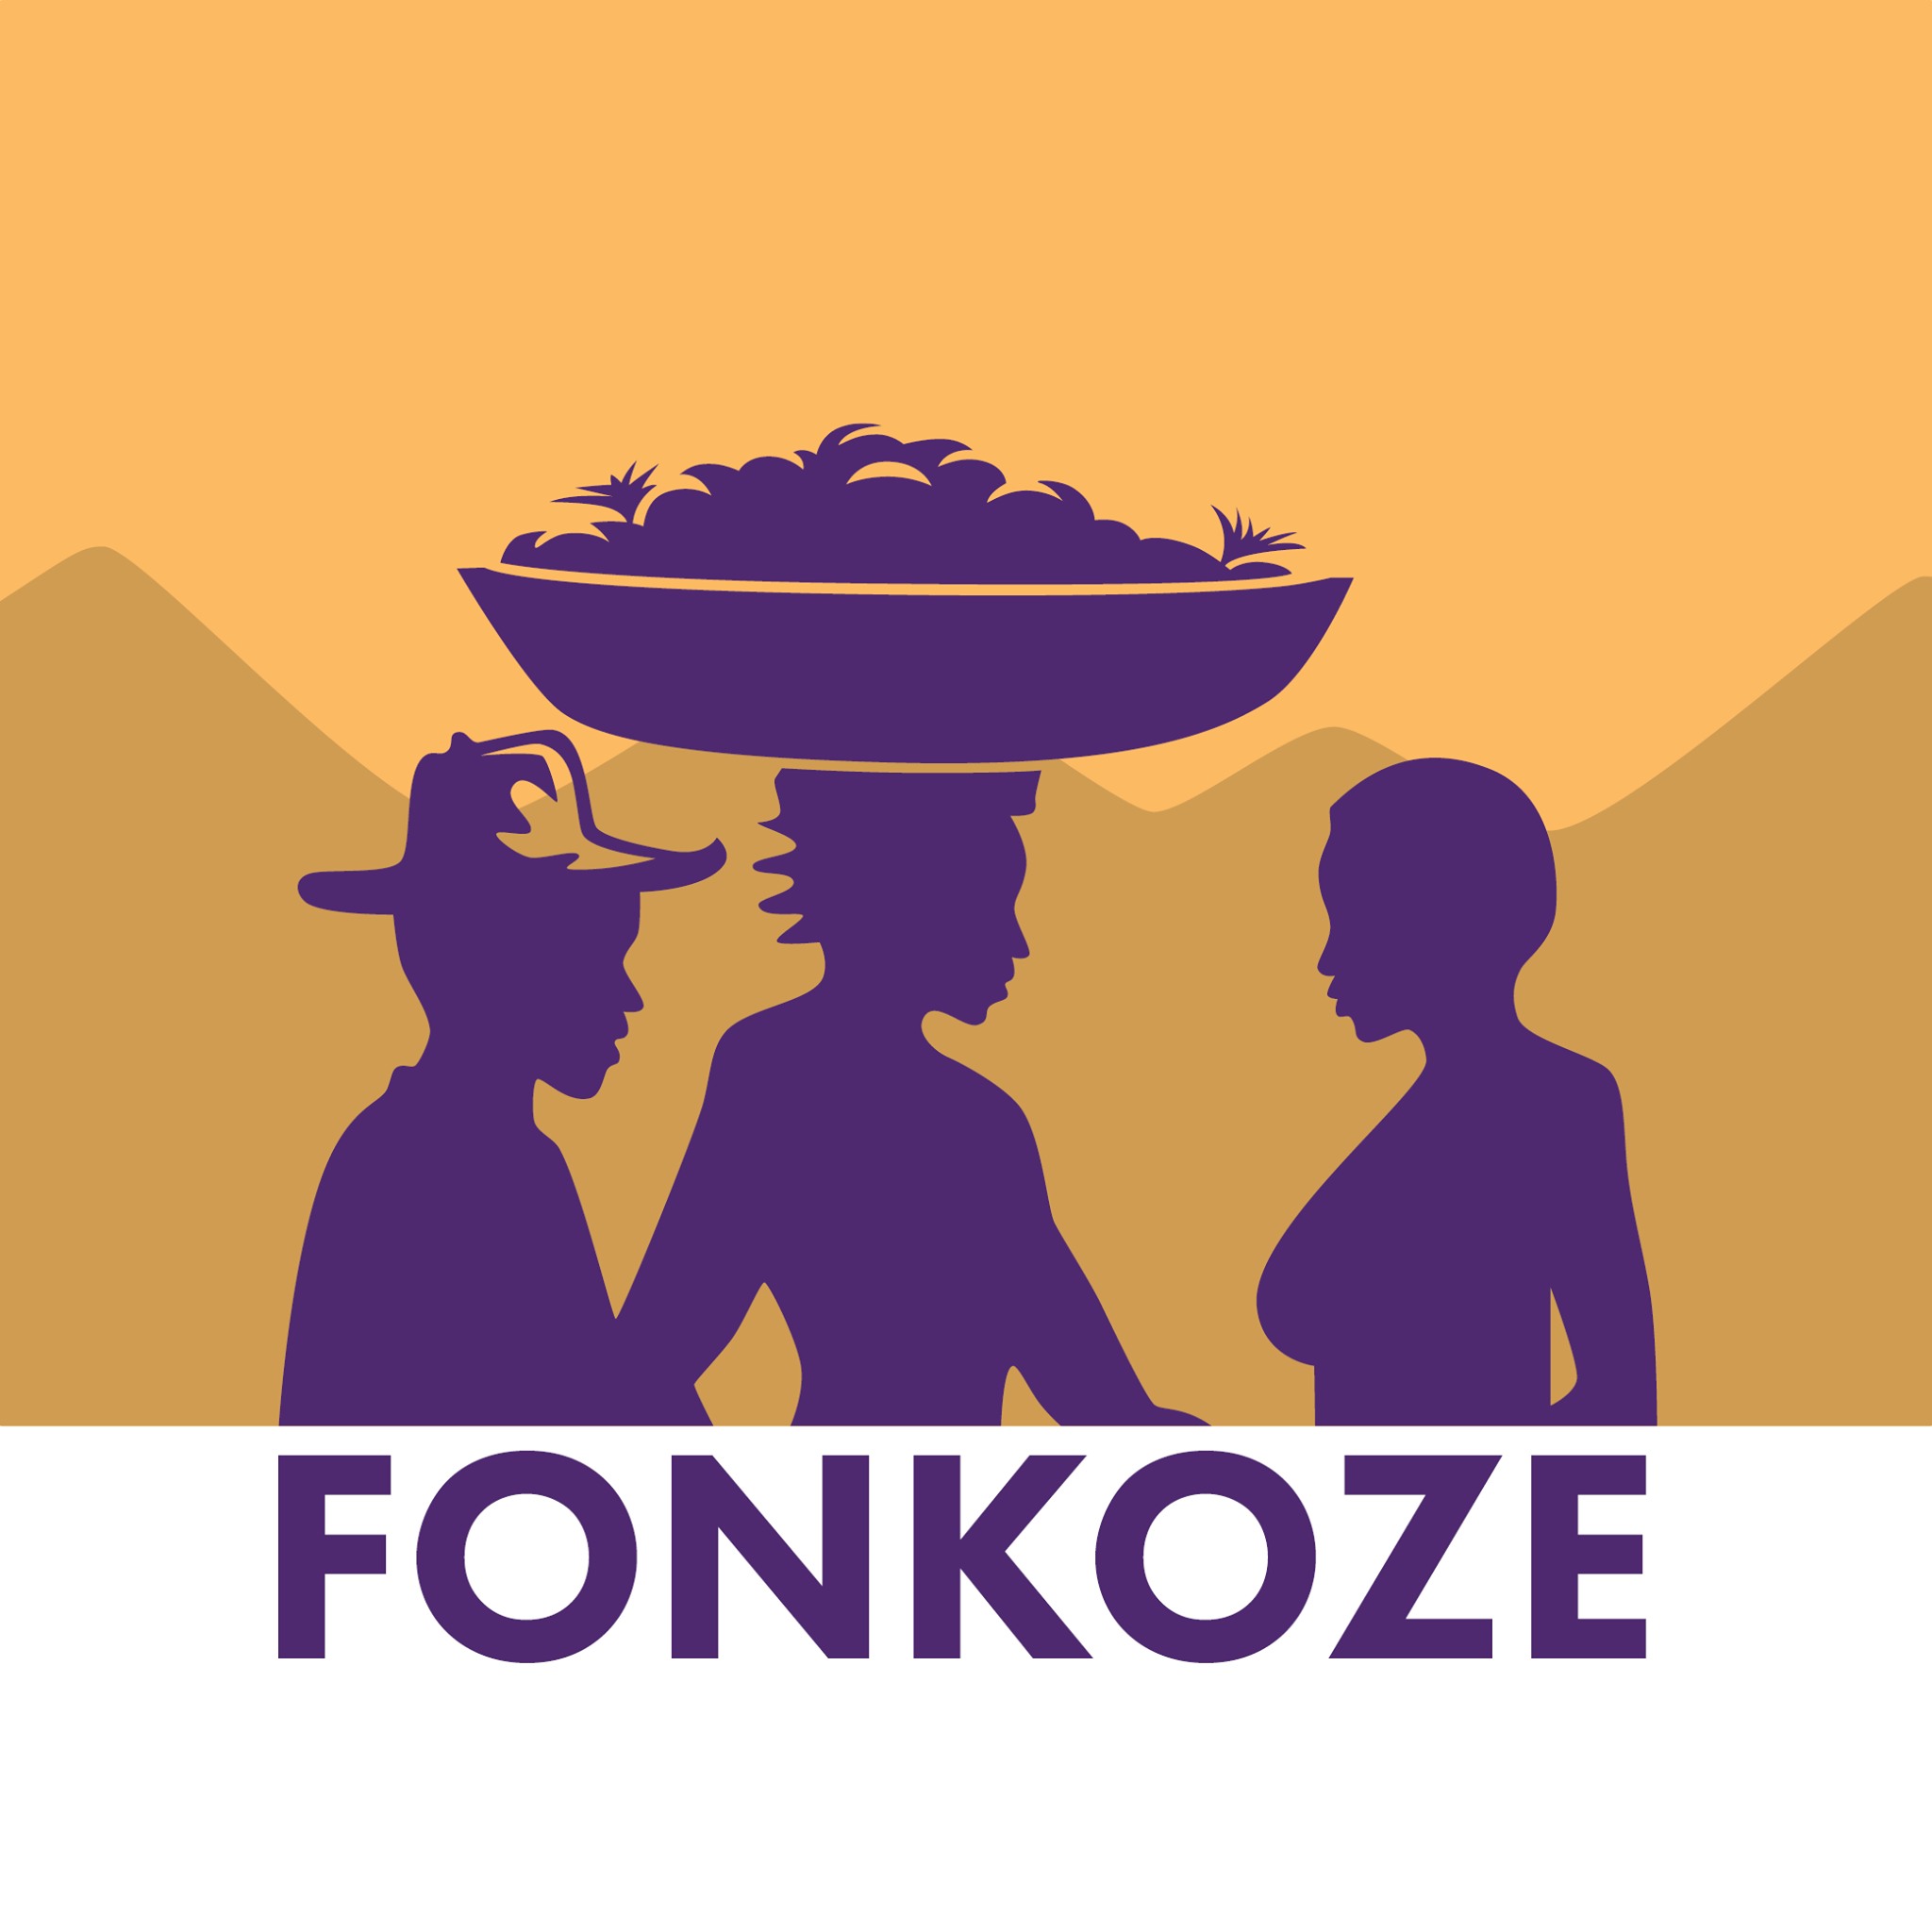 Fonkoze